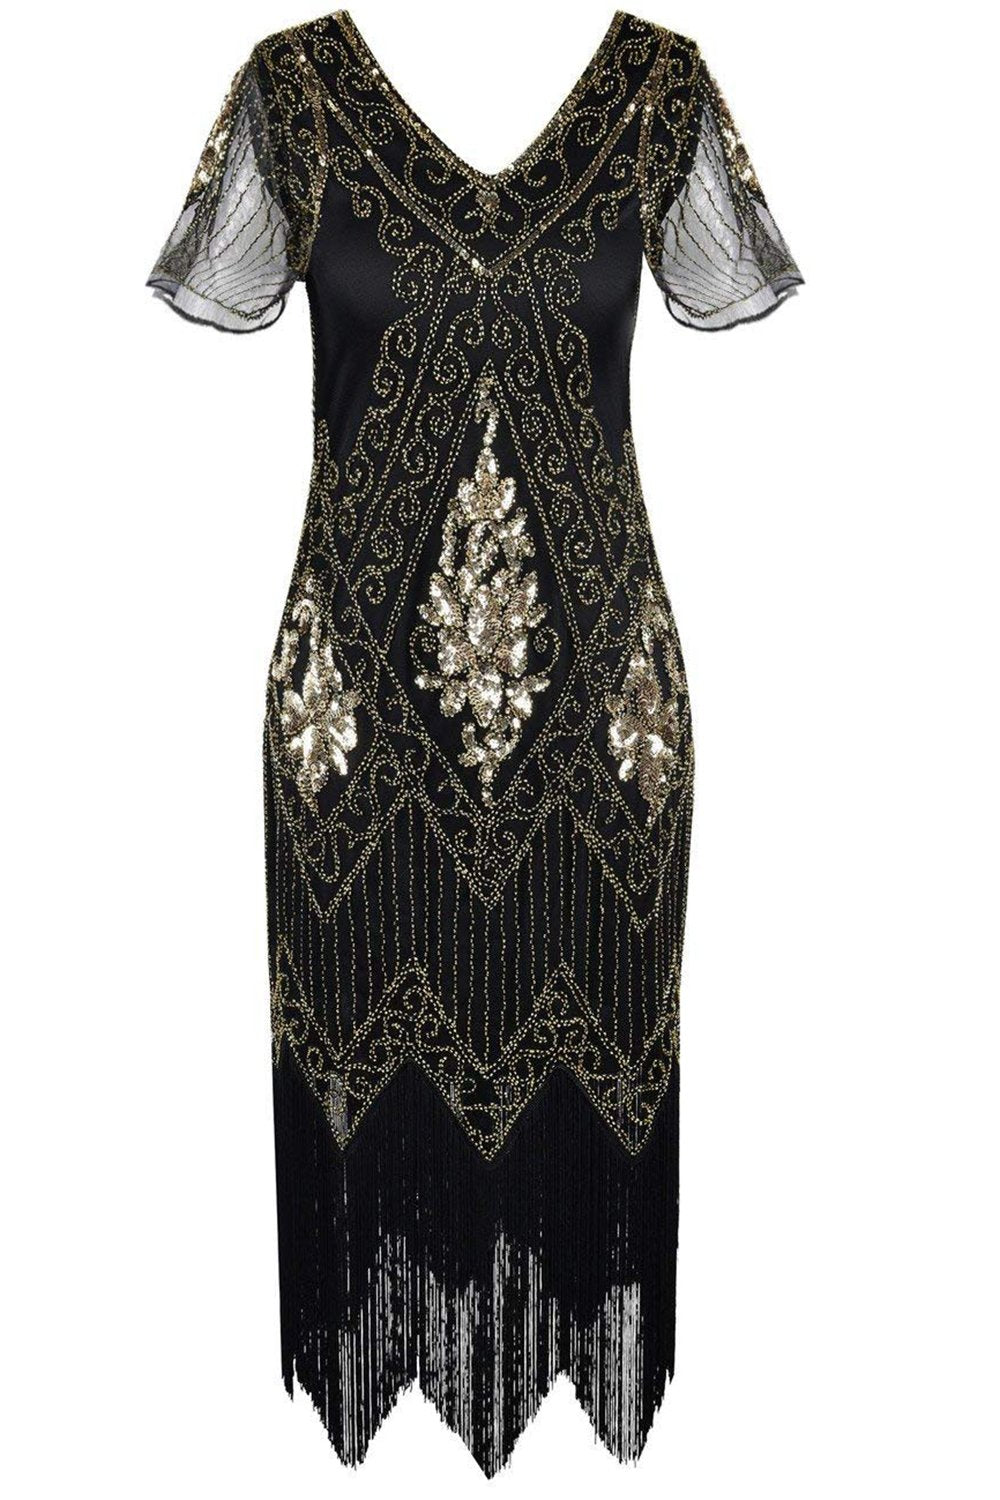 V Neck Black 1920s Plus Size Flapper Dress